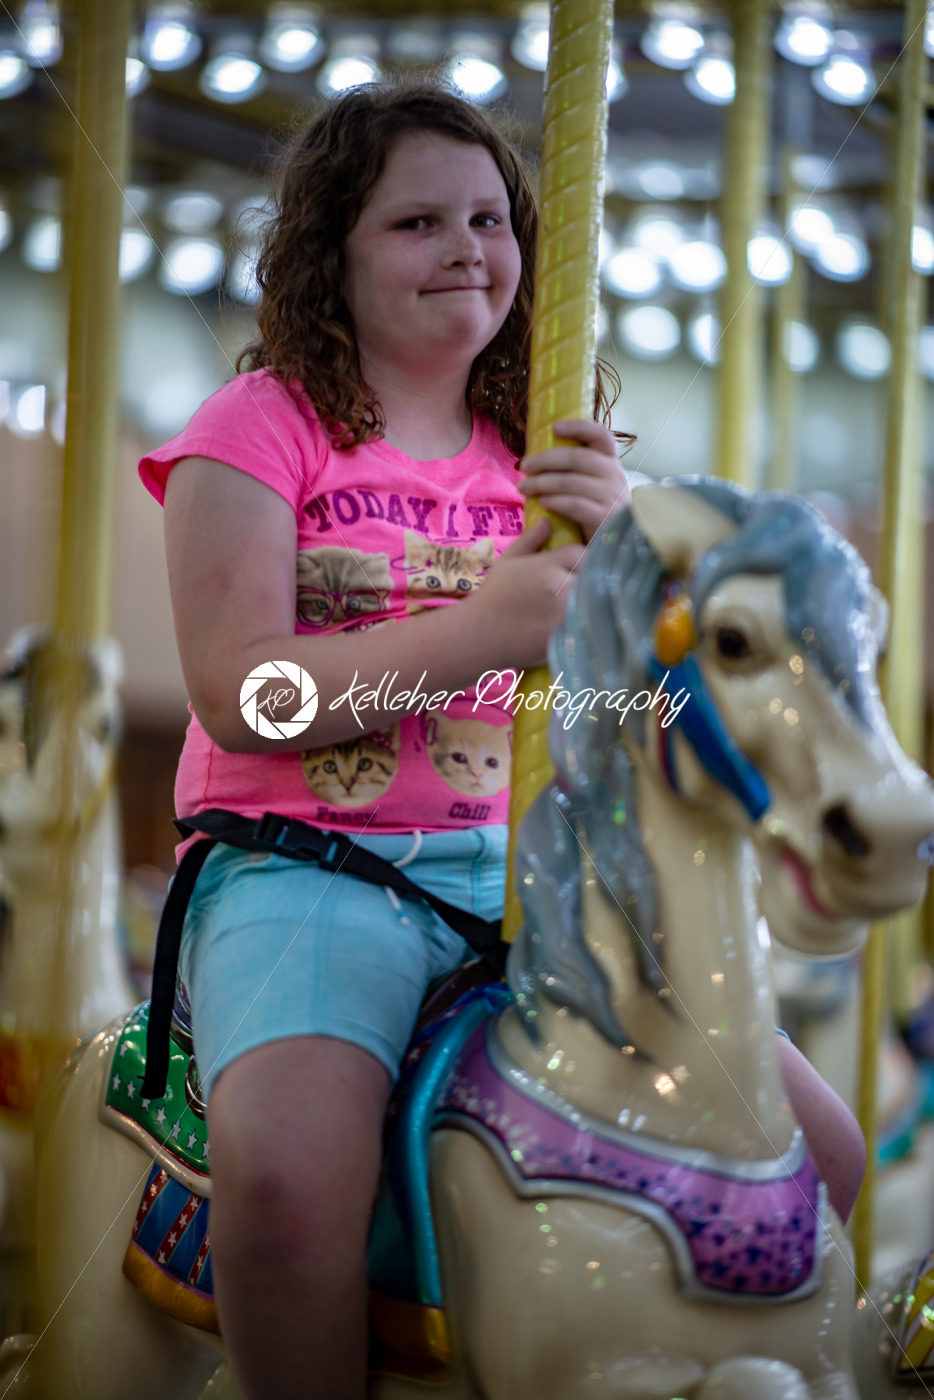 Happy young girl having fun on boardwalk amusement ride - Kelleher Photography Store